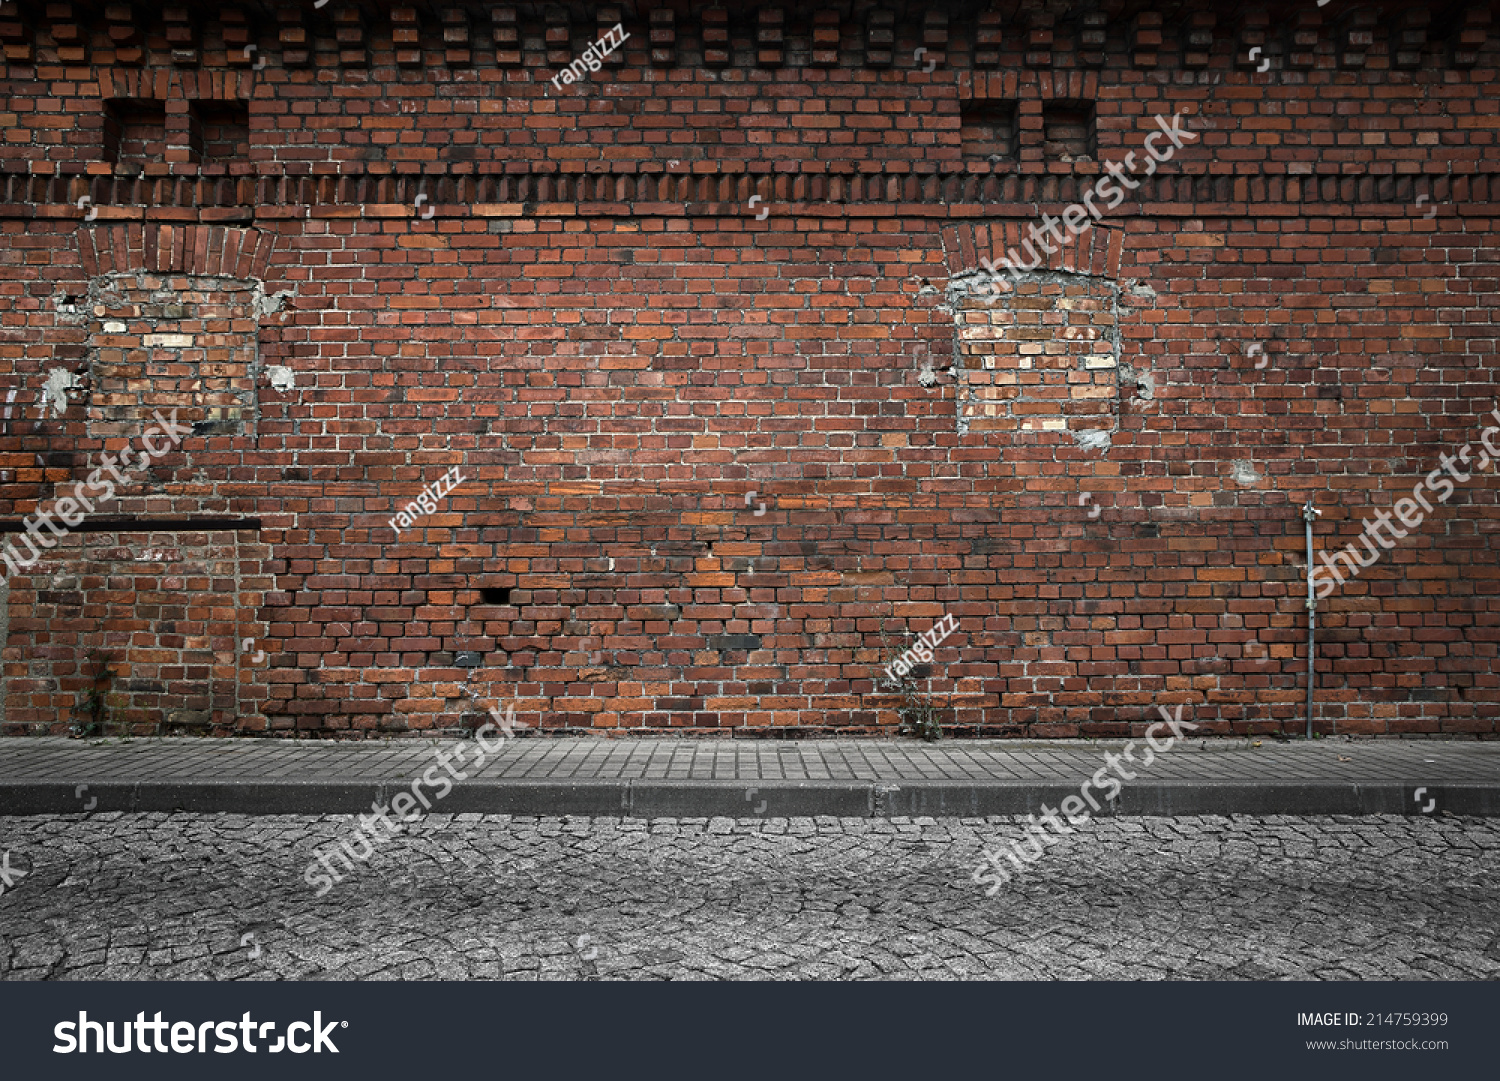 Industrial background, empty grunge urban street with warehouse brick wall #214759399